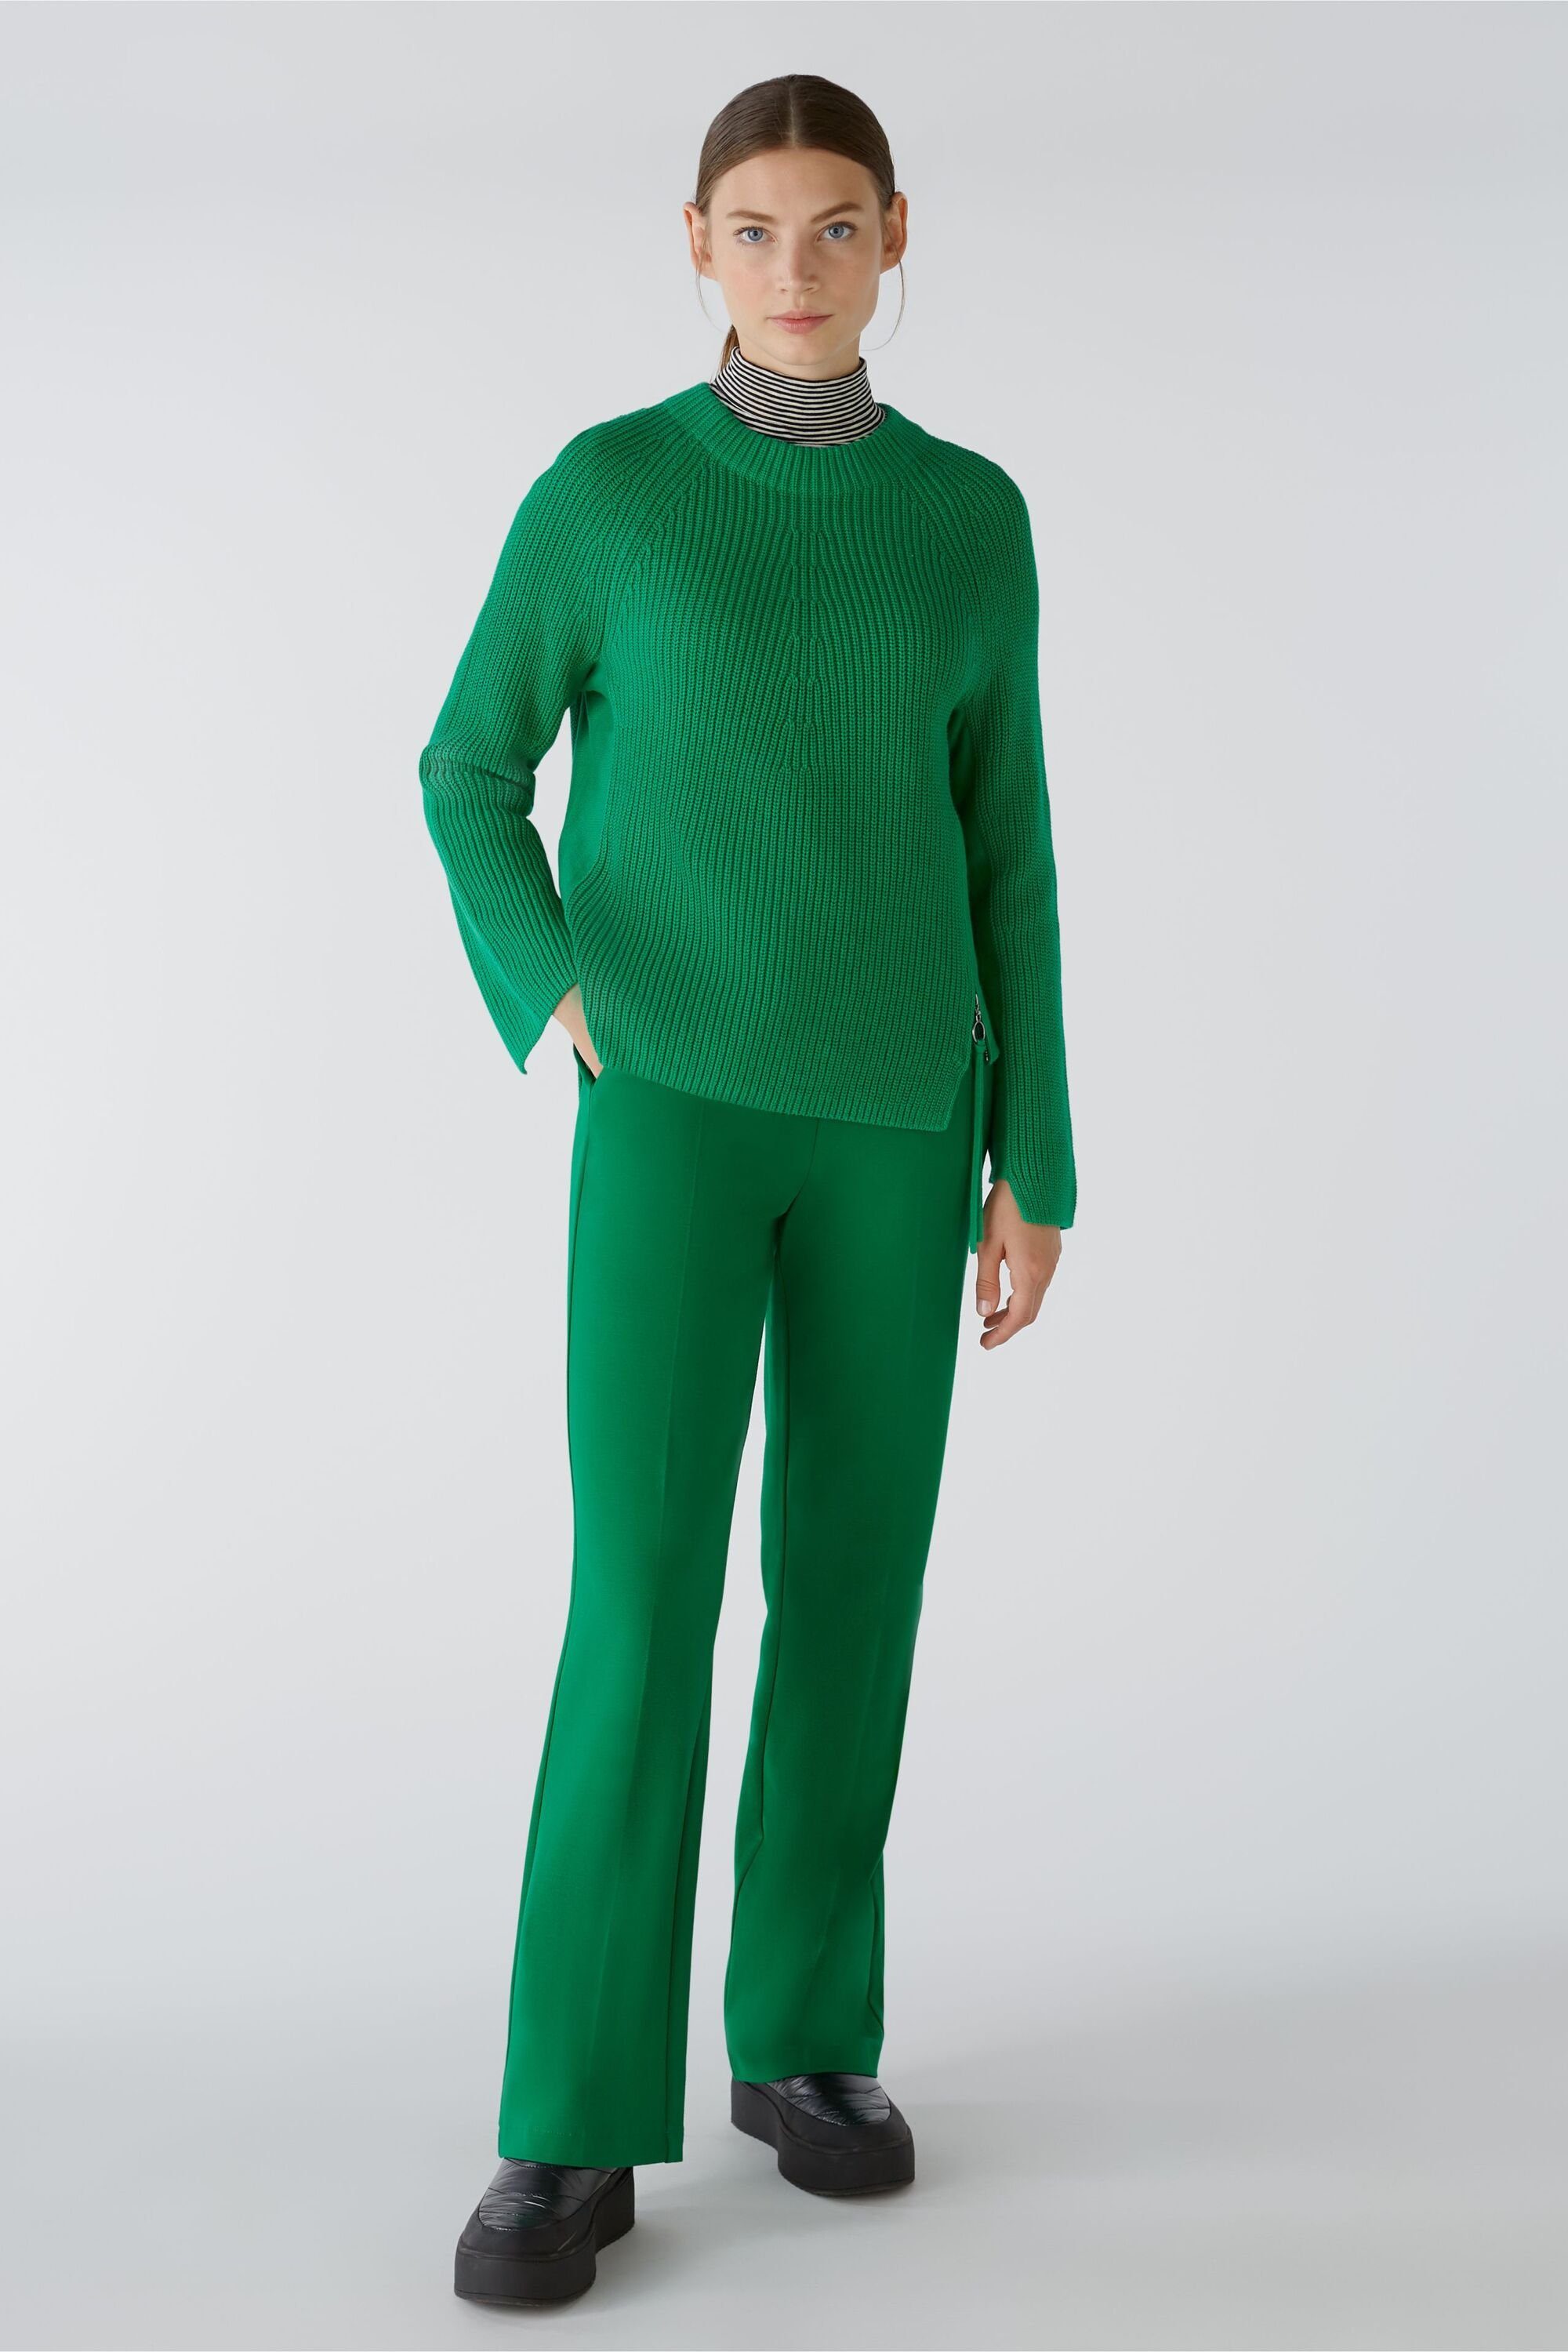 green RUBI Strickpullover Pullover Oui